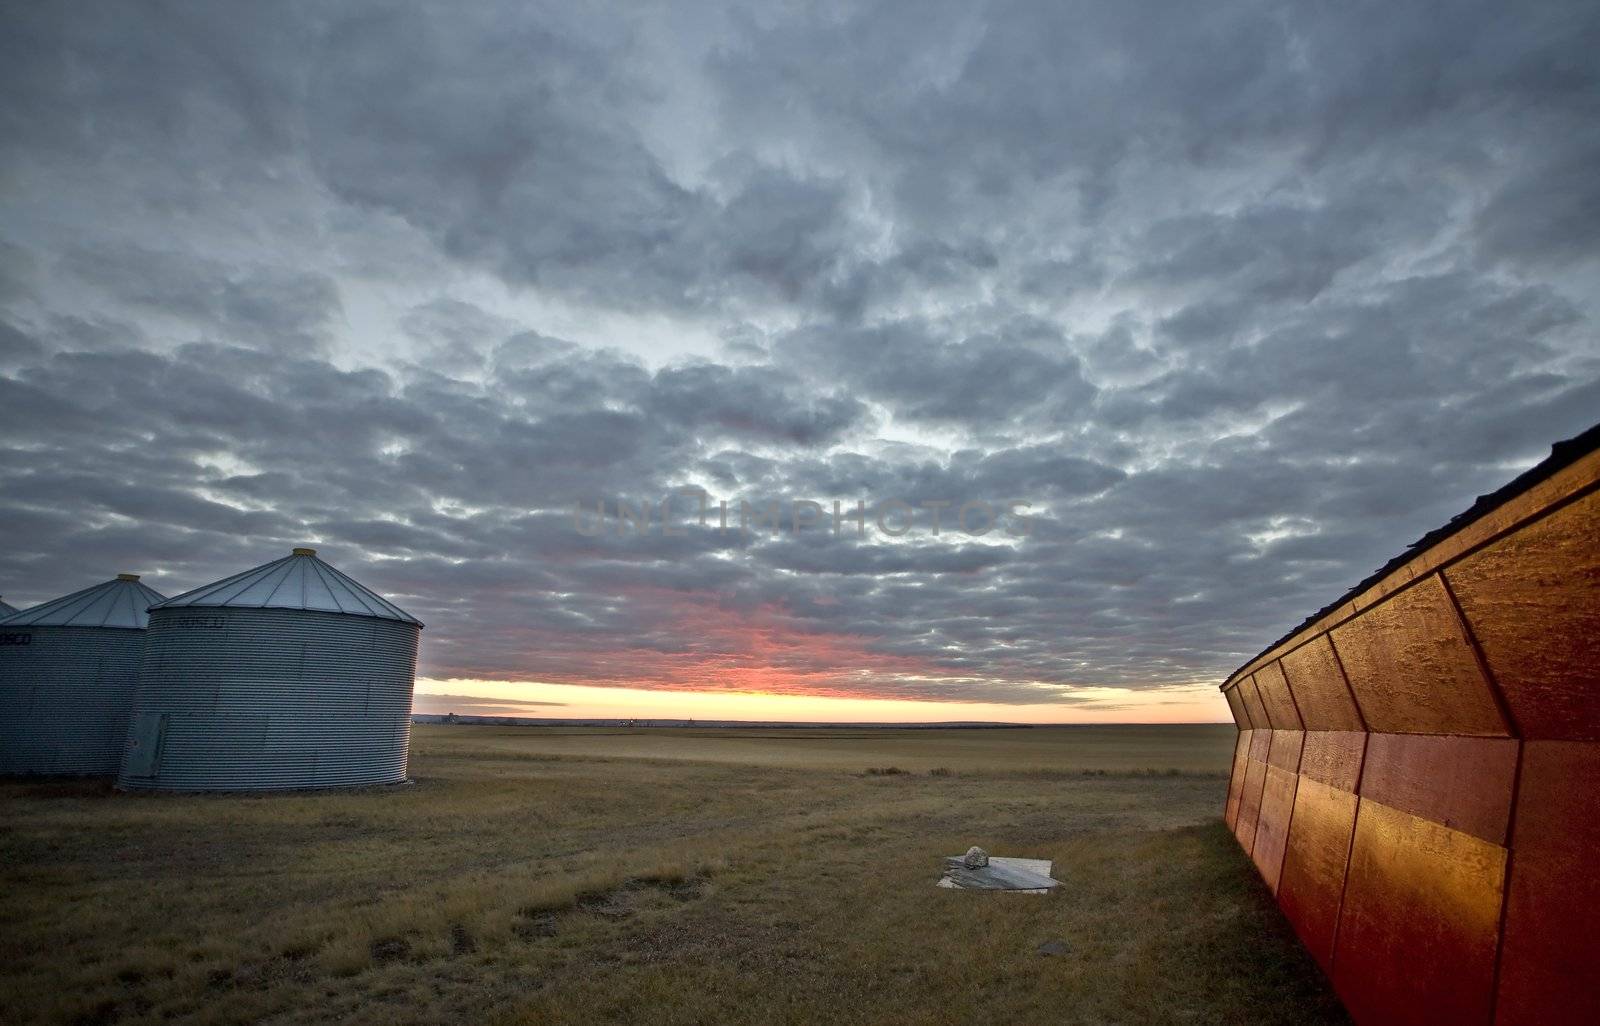 Sunset Saskatchewan Canada by pictureguy